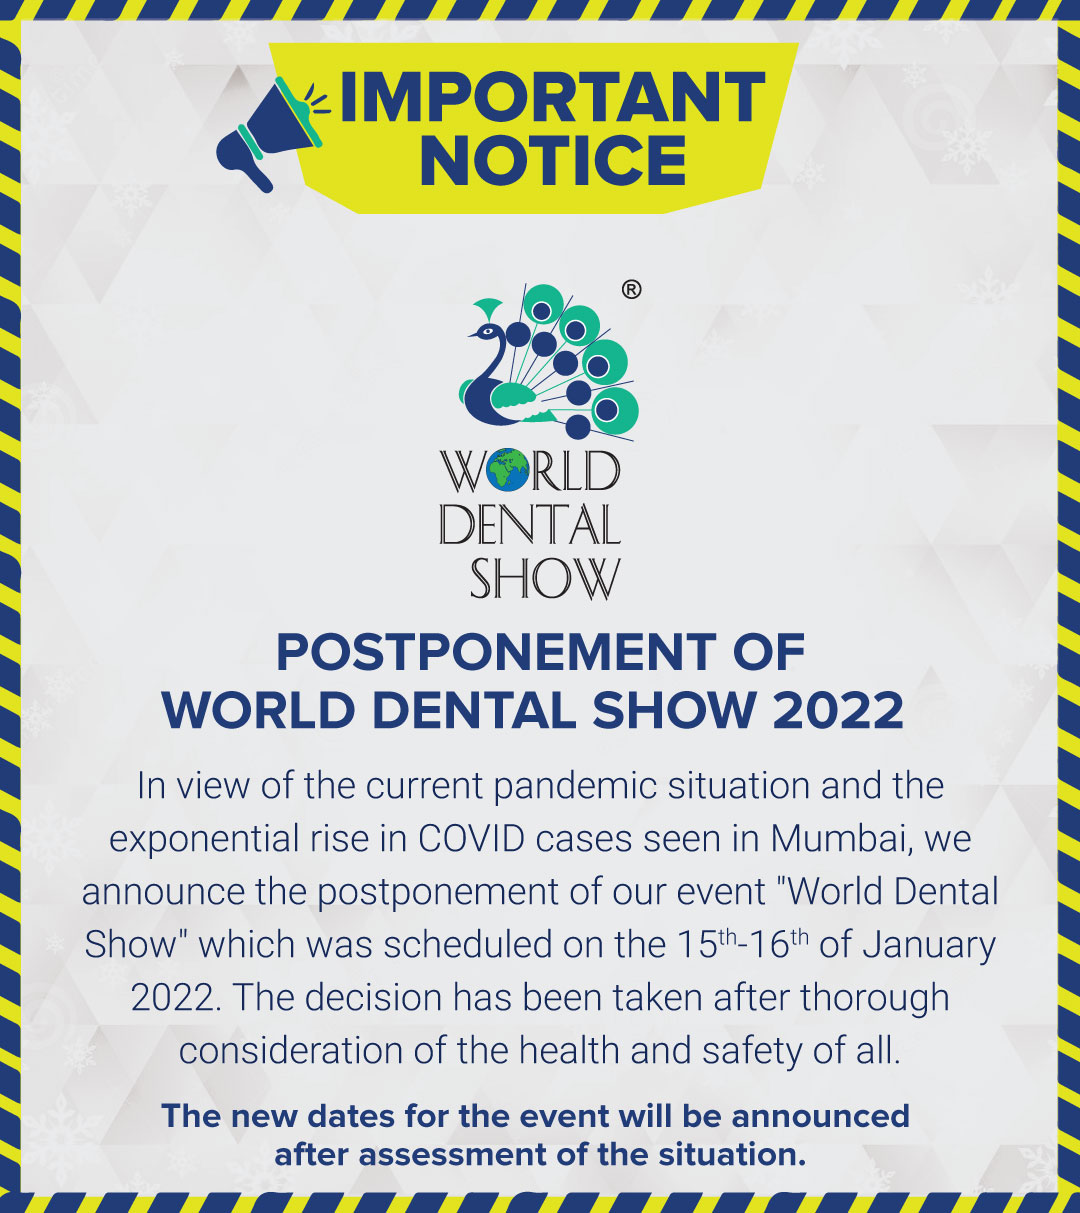 World Dental Show